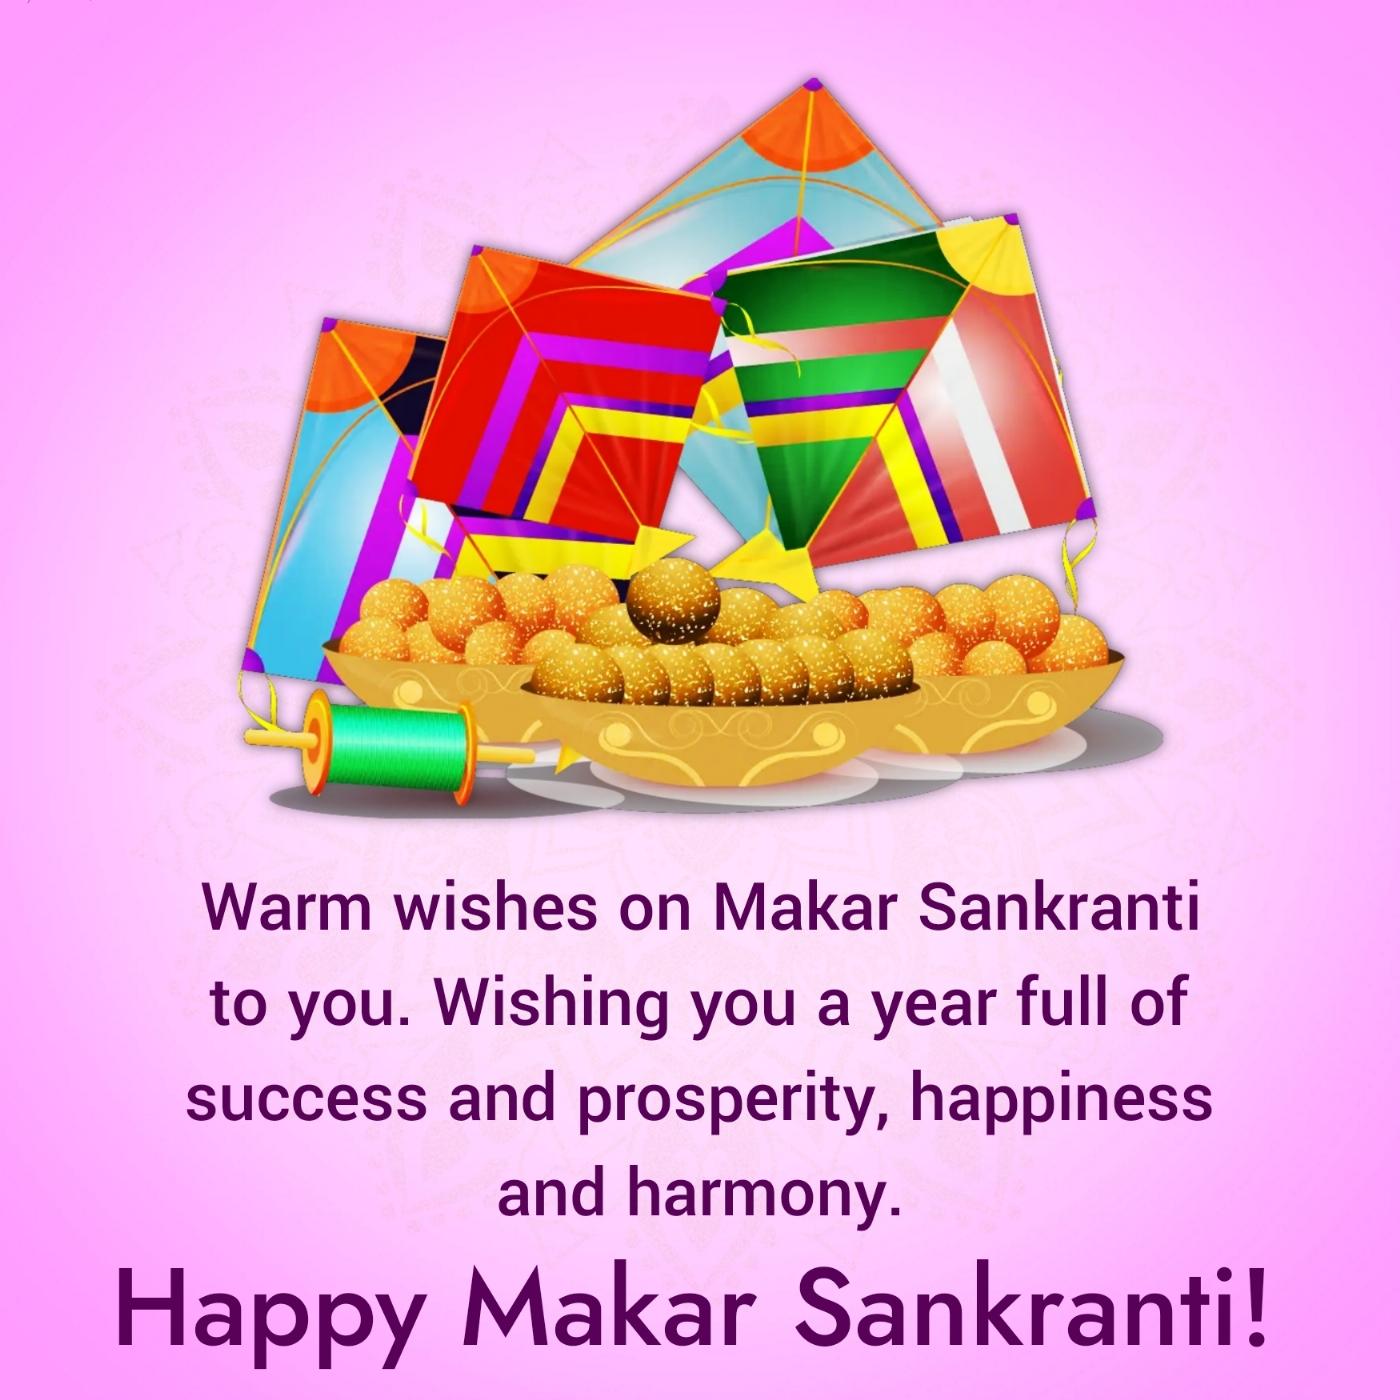 Warm wishes on Makar Sankranti to you